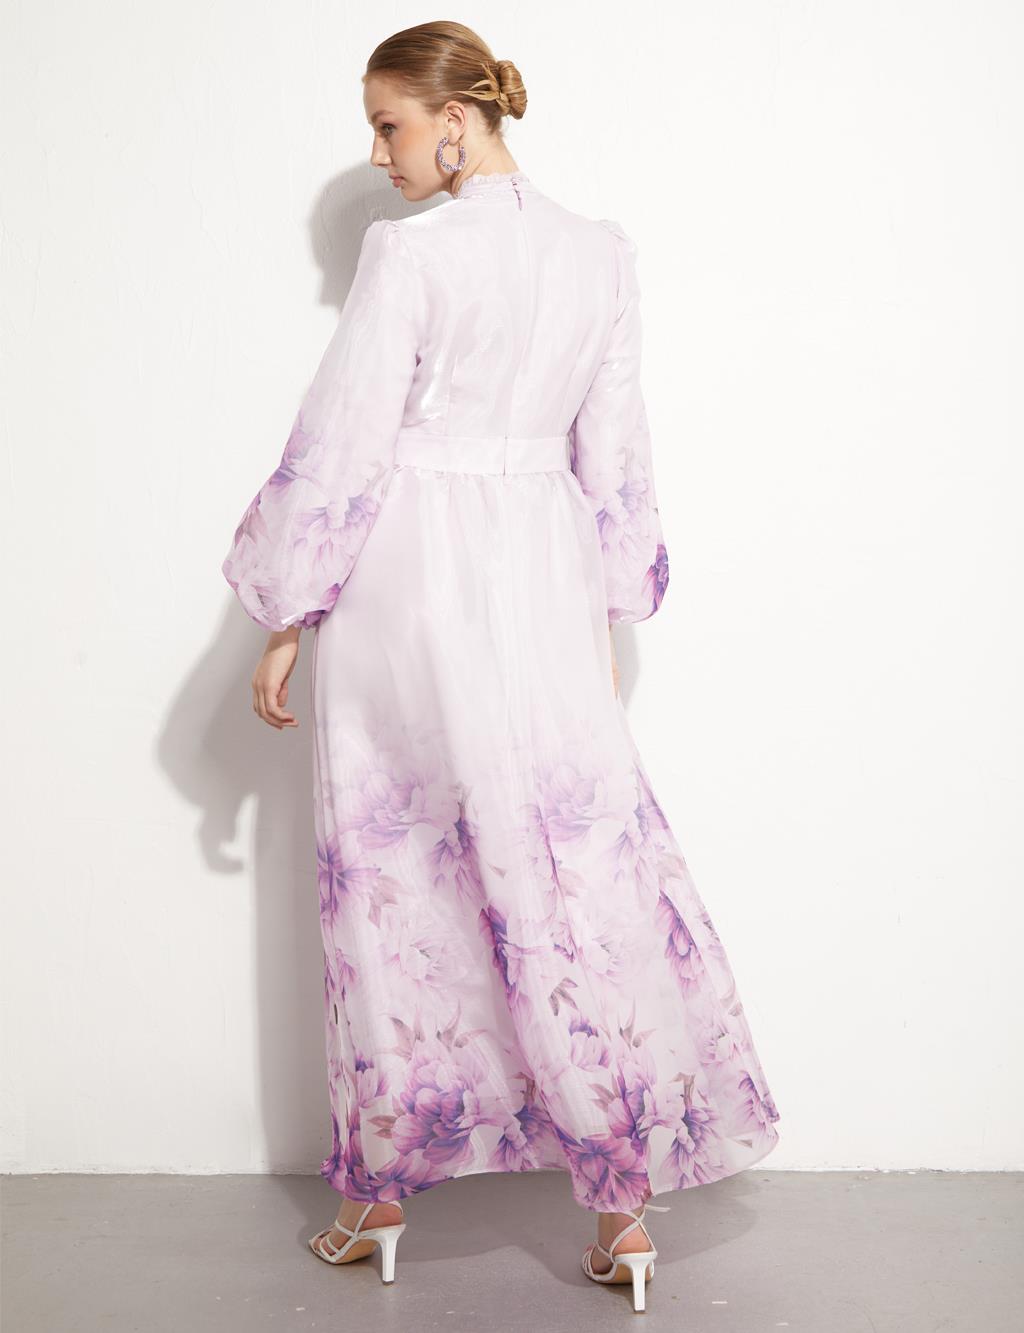 KAYRA Floral Pattern Chiffon Covered Dress Light Lilac